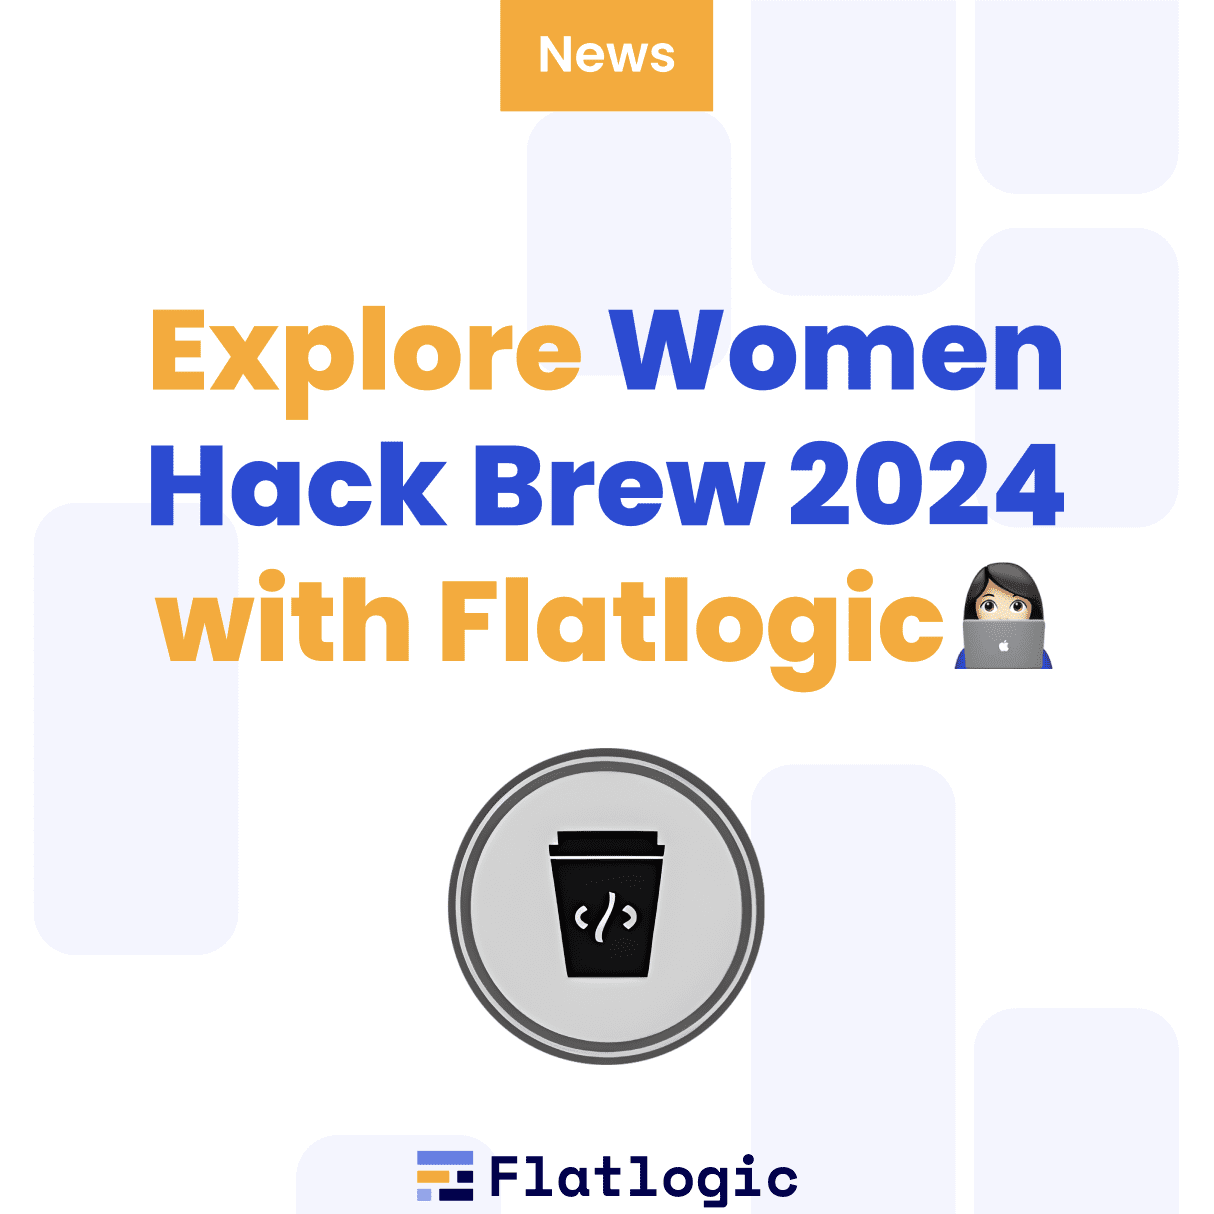 Explore Women Hack Brew 2024 with Flatlogic